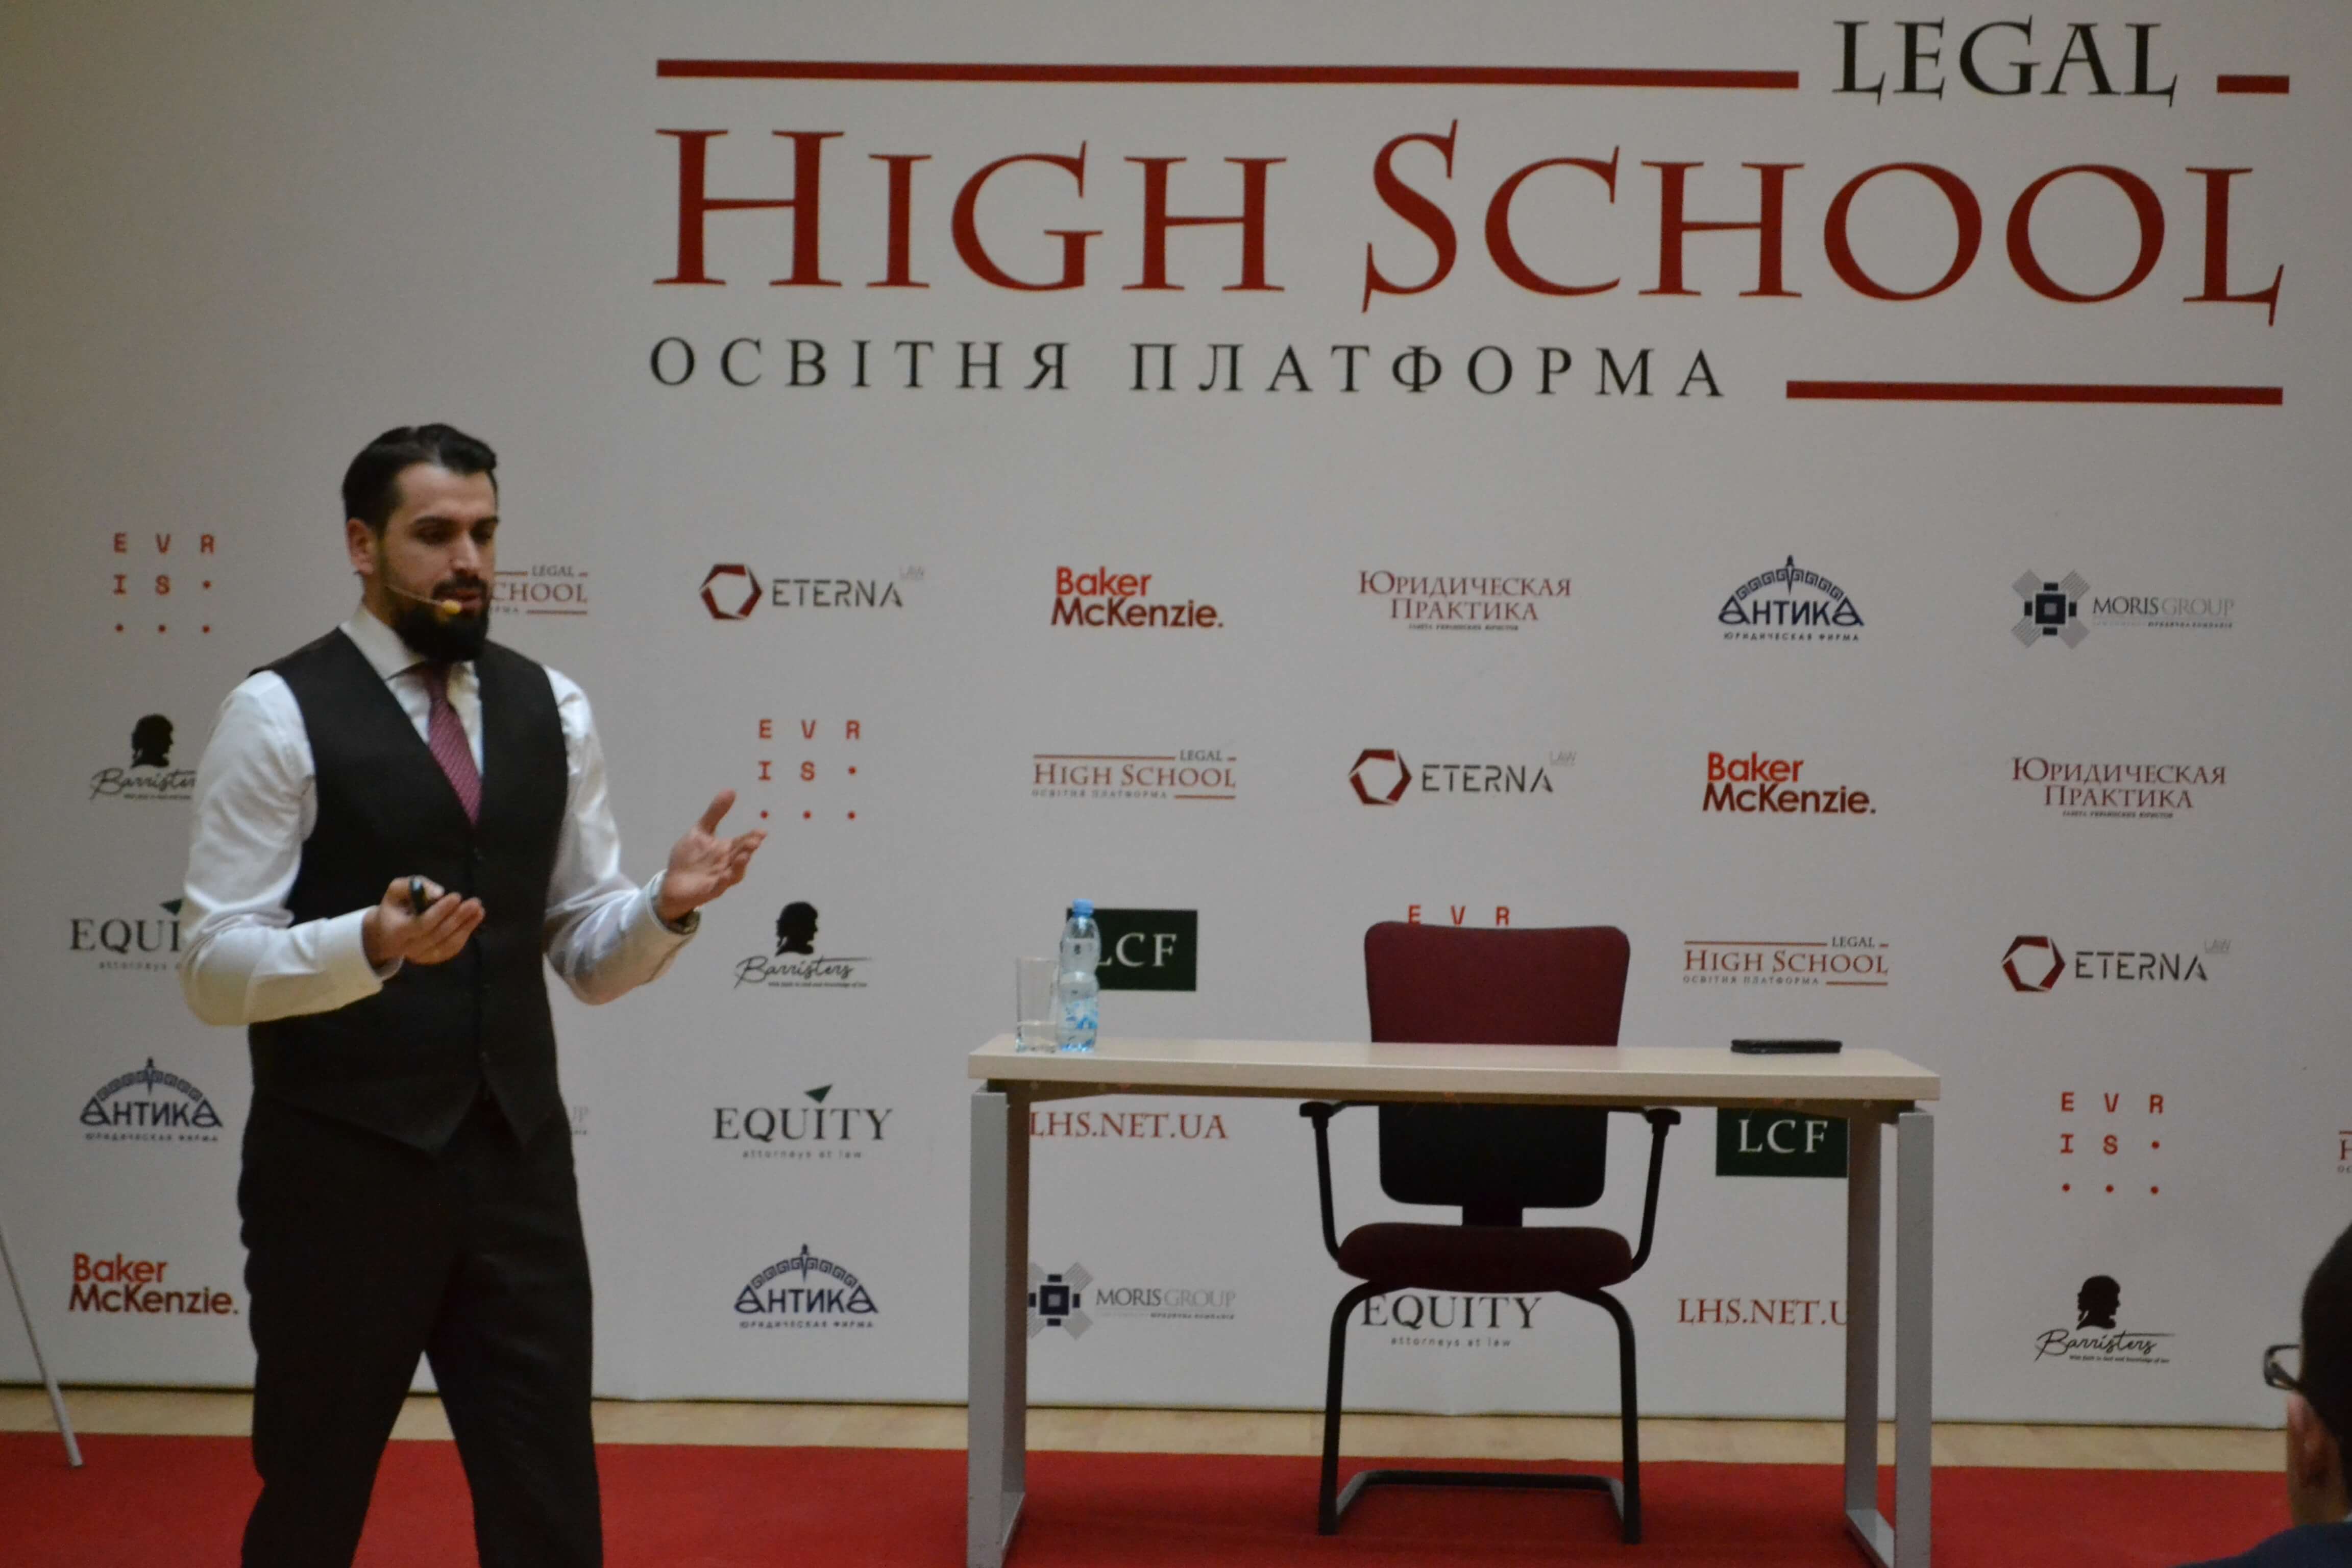 Oleg Malinevskiy again spoke in support of LHS